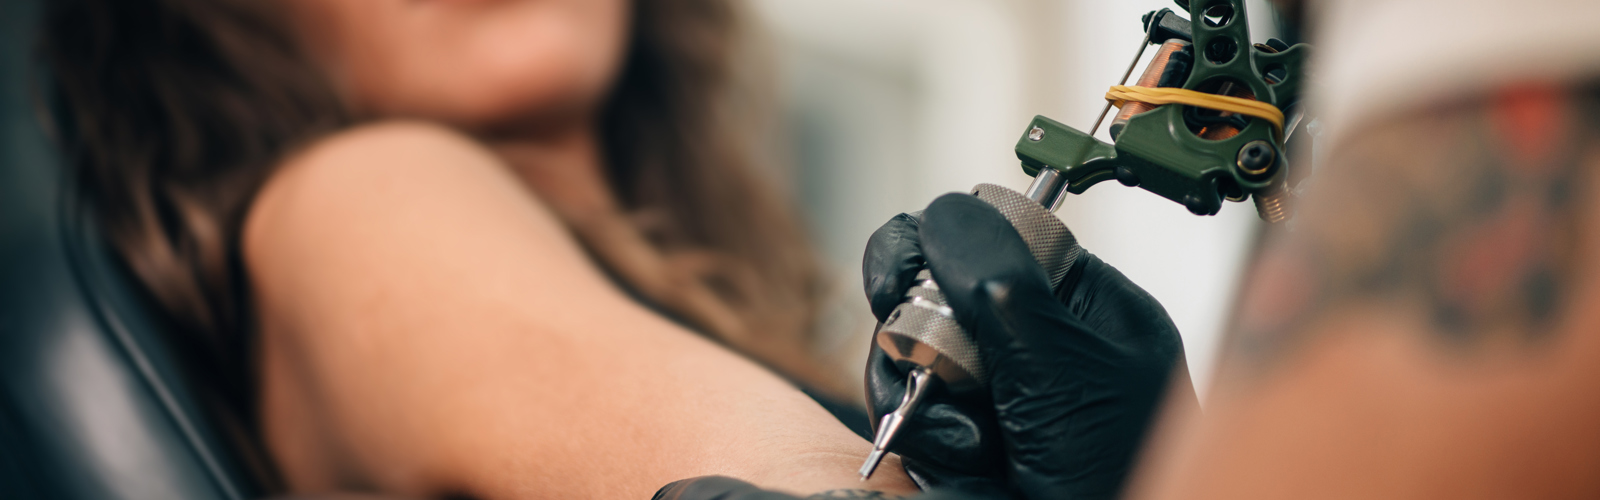 Tattooist tattooing a persons arm